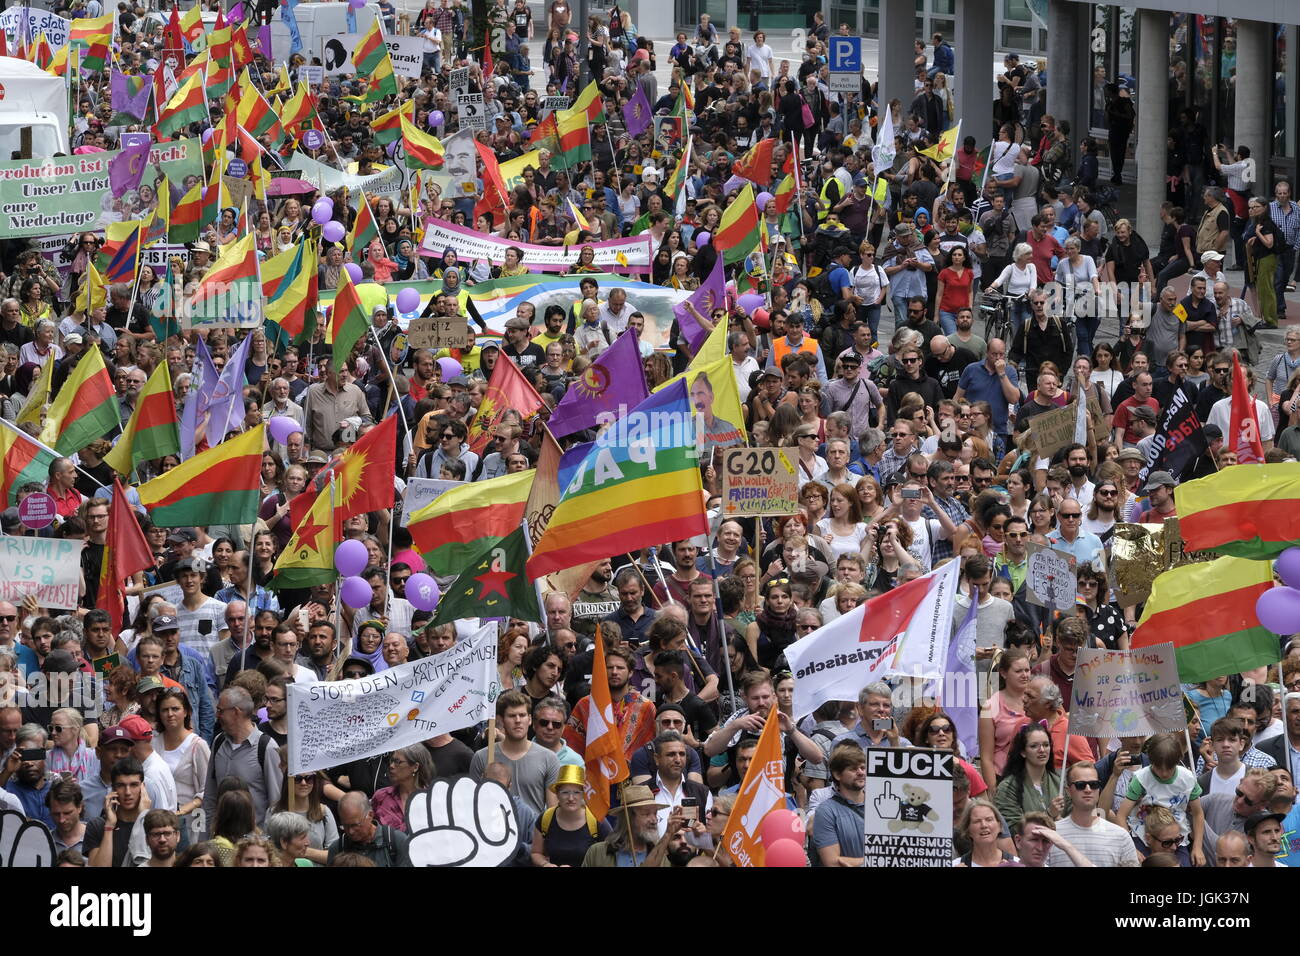 Hamburg, Germany. 08th July, 2017. Large anti G20 demonstration in Hamburg.Large demonstration against G20 by predominantly left wing groups marches through central Hamburg. Credit: Iain Masterton/Alamy Live News Stock Photo